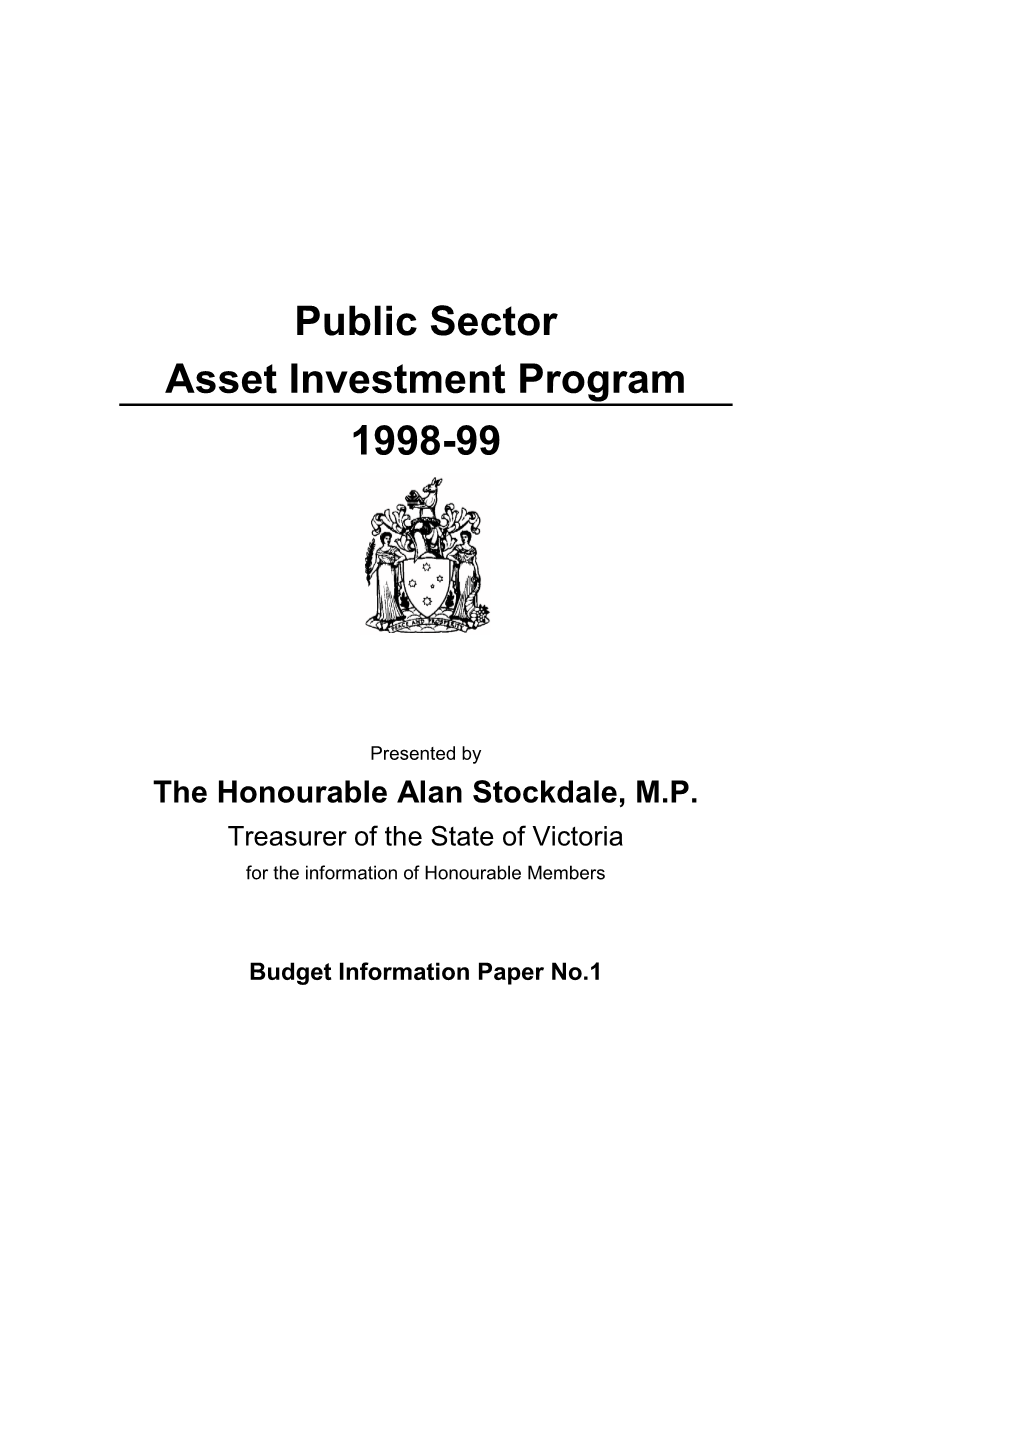 Public Sector Asset Investment Program 1998-99